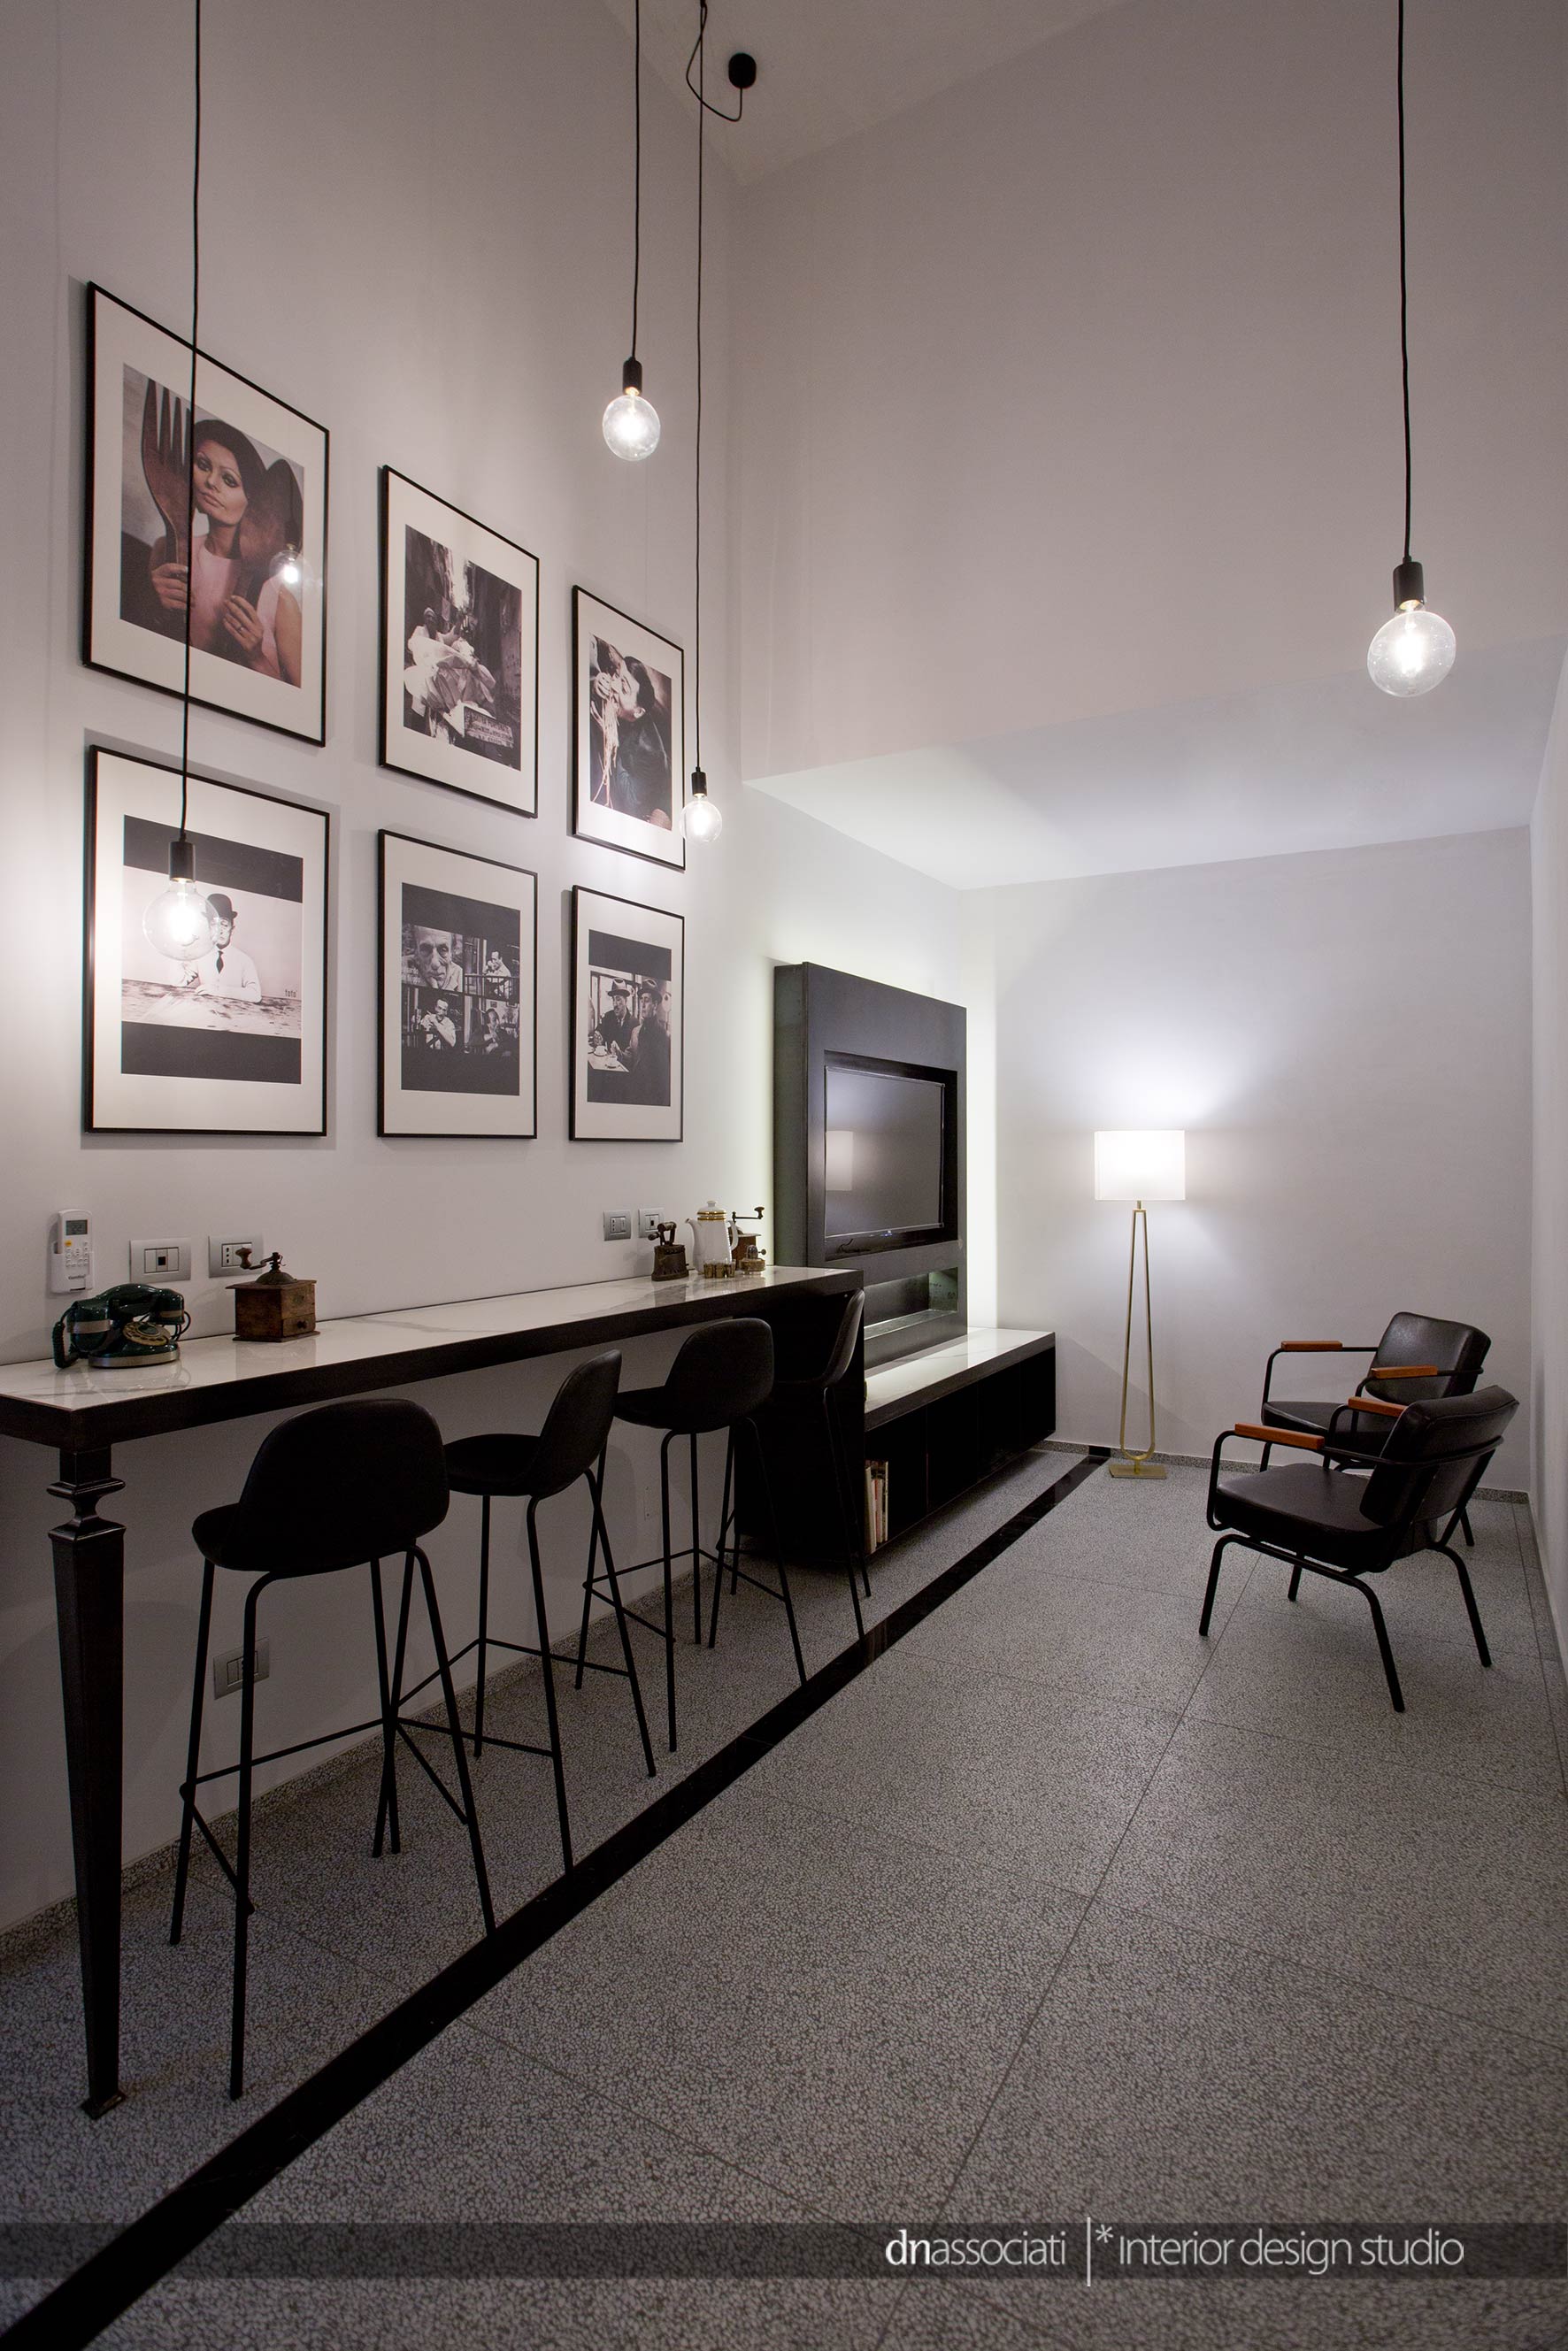 DNAssociati Interior Designer - BeB Guest House, San Severo NAPOLI - napoli